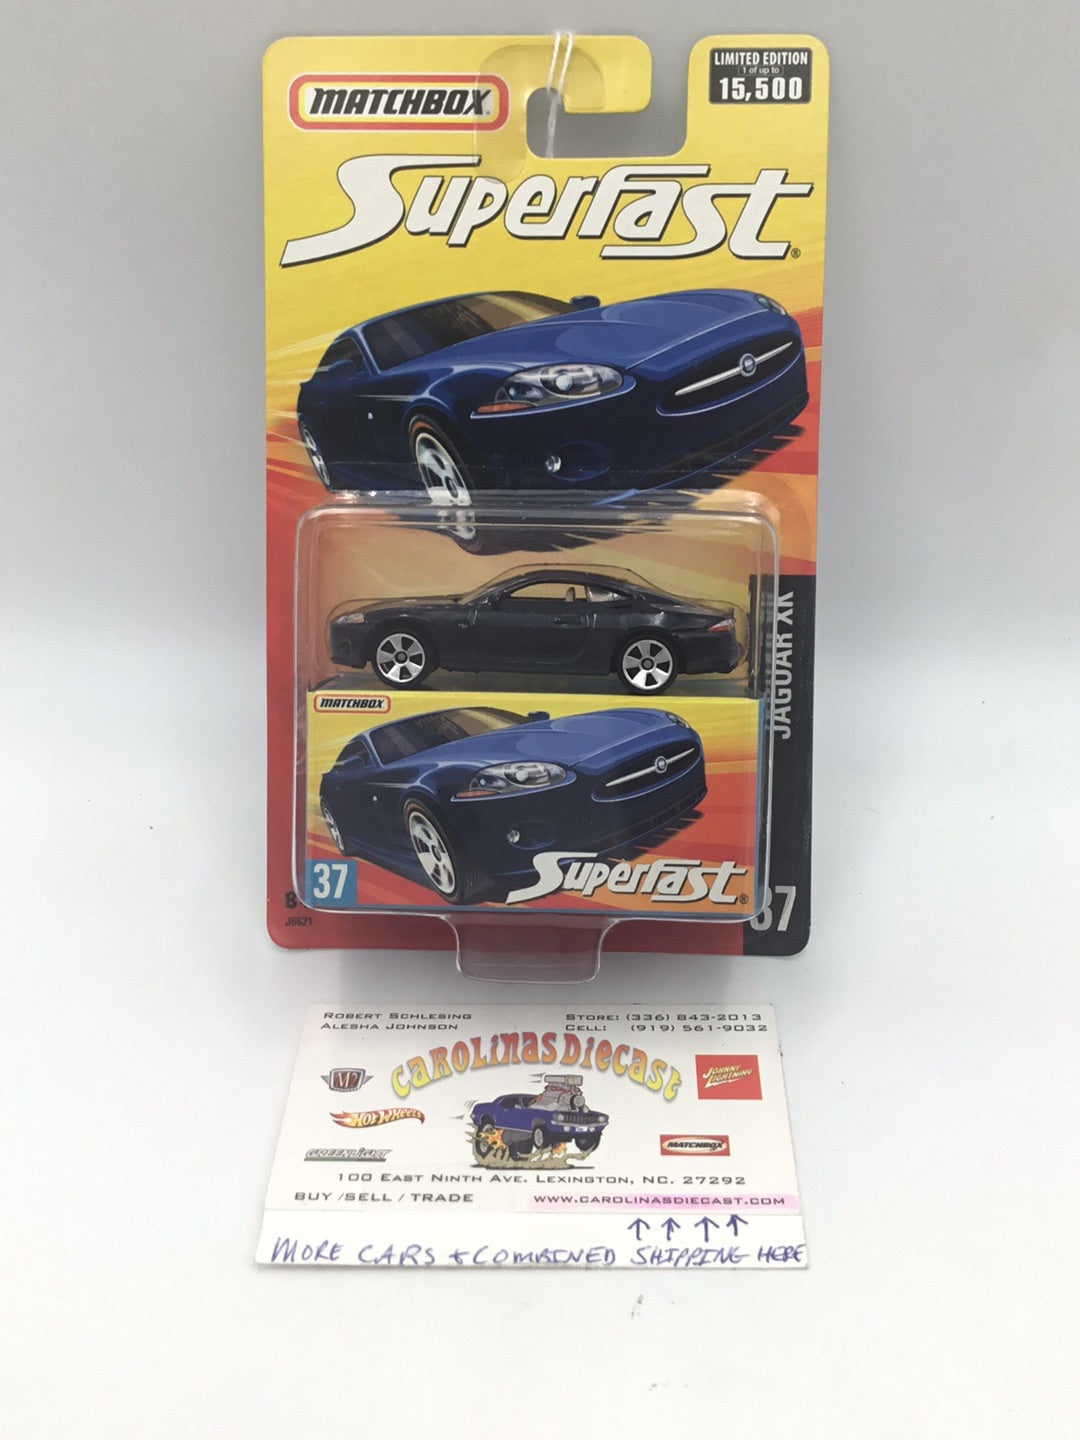 Matchbox Superfast #37 Jaguar XK limited to 15,500 Q5